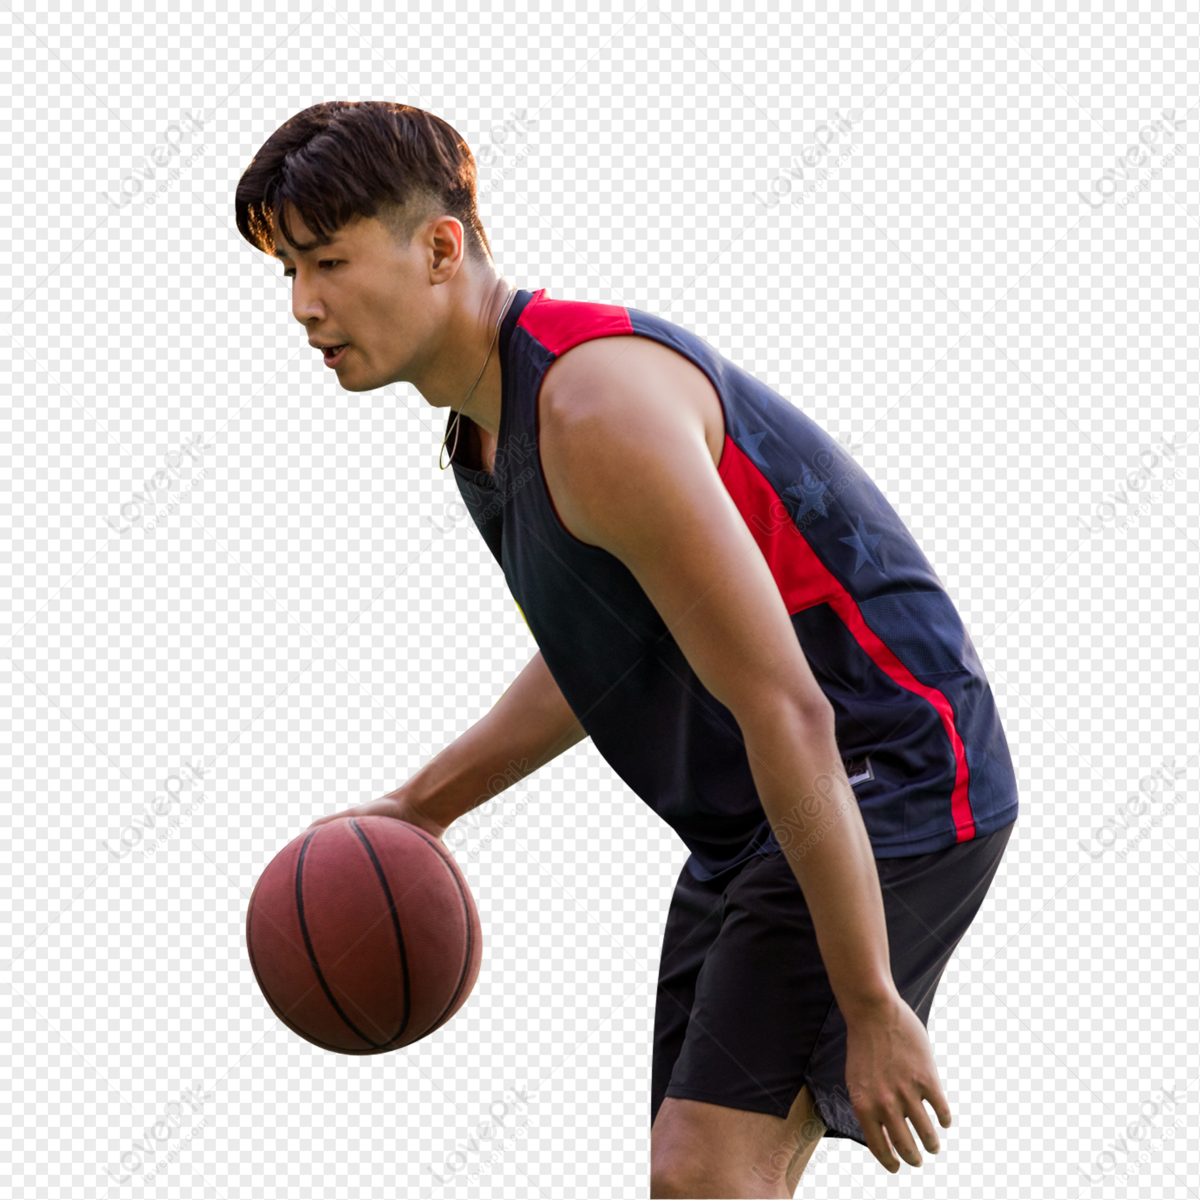 Charlotte Bobcats' Ben Gordon poses during the NBA basketball -  kajotpoker.com